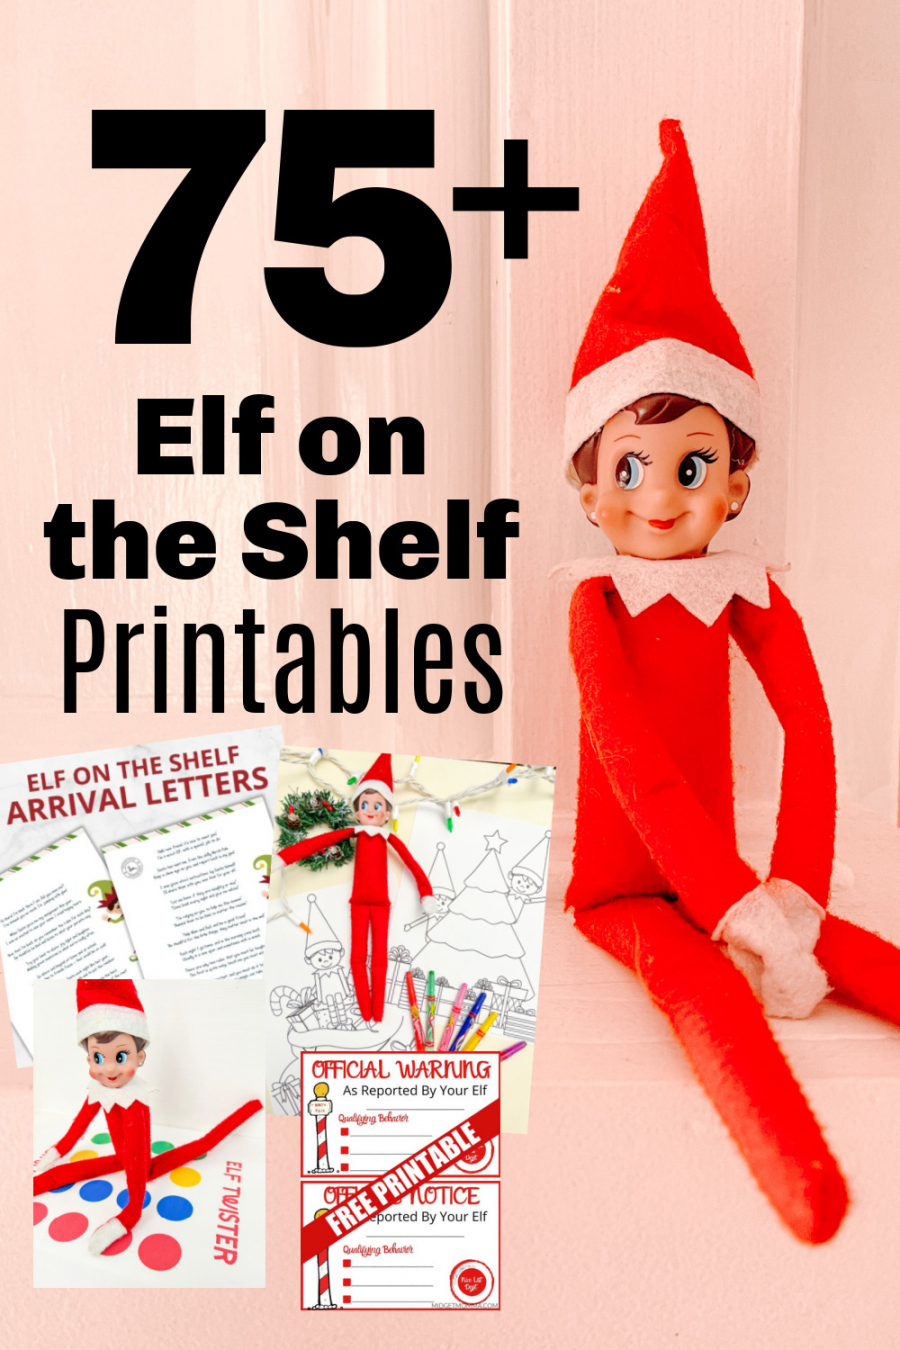 Elf On The Shelf Printables Free - Printable - Ultimate List of FREE Elf on the Shelf Printables - Over